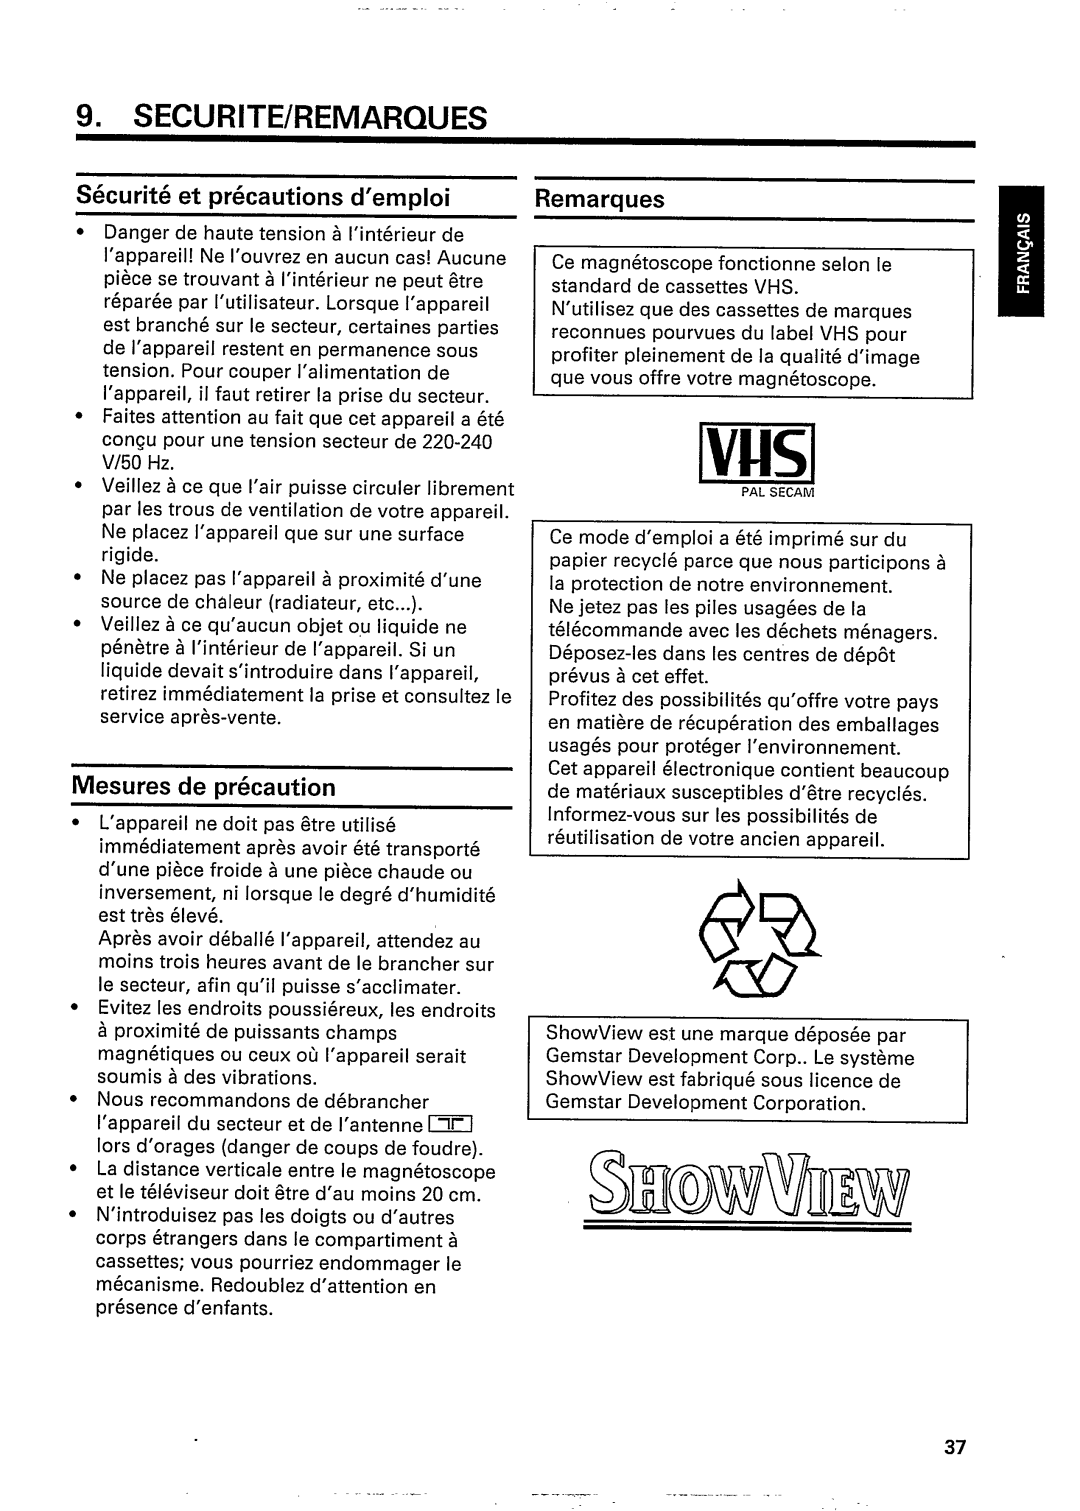 Philips 35DV6 manual 